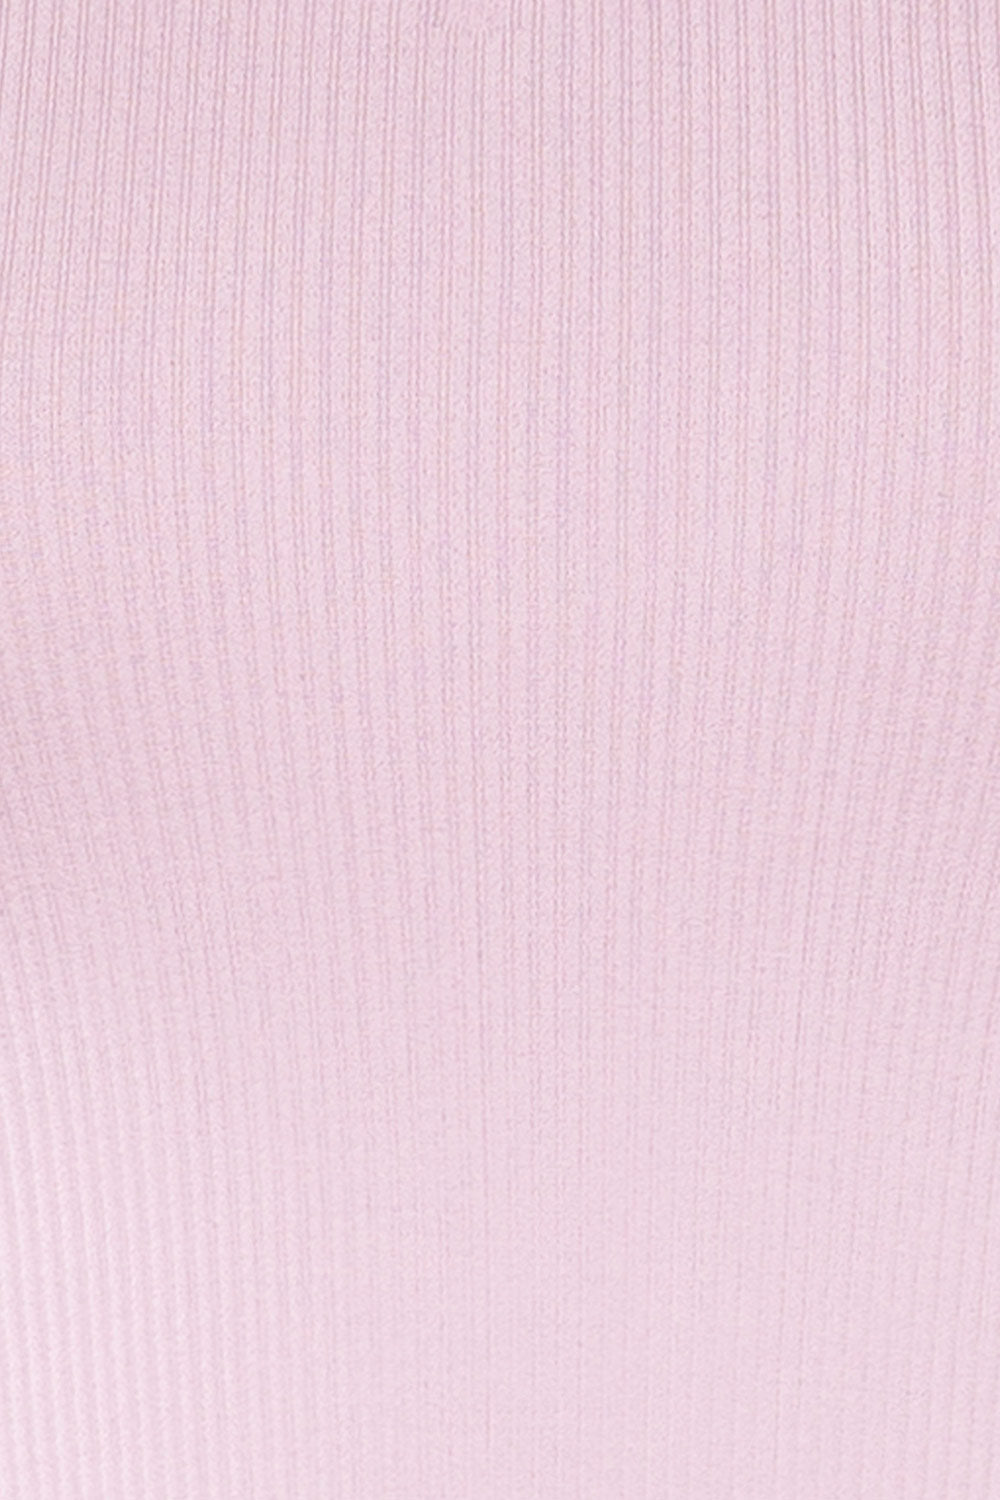 Twisty Lilac Cropped Twisted Tank Top | La petite garçonne fabric  